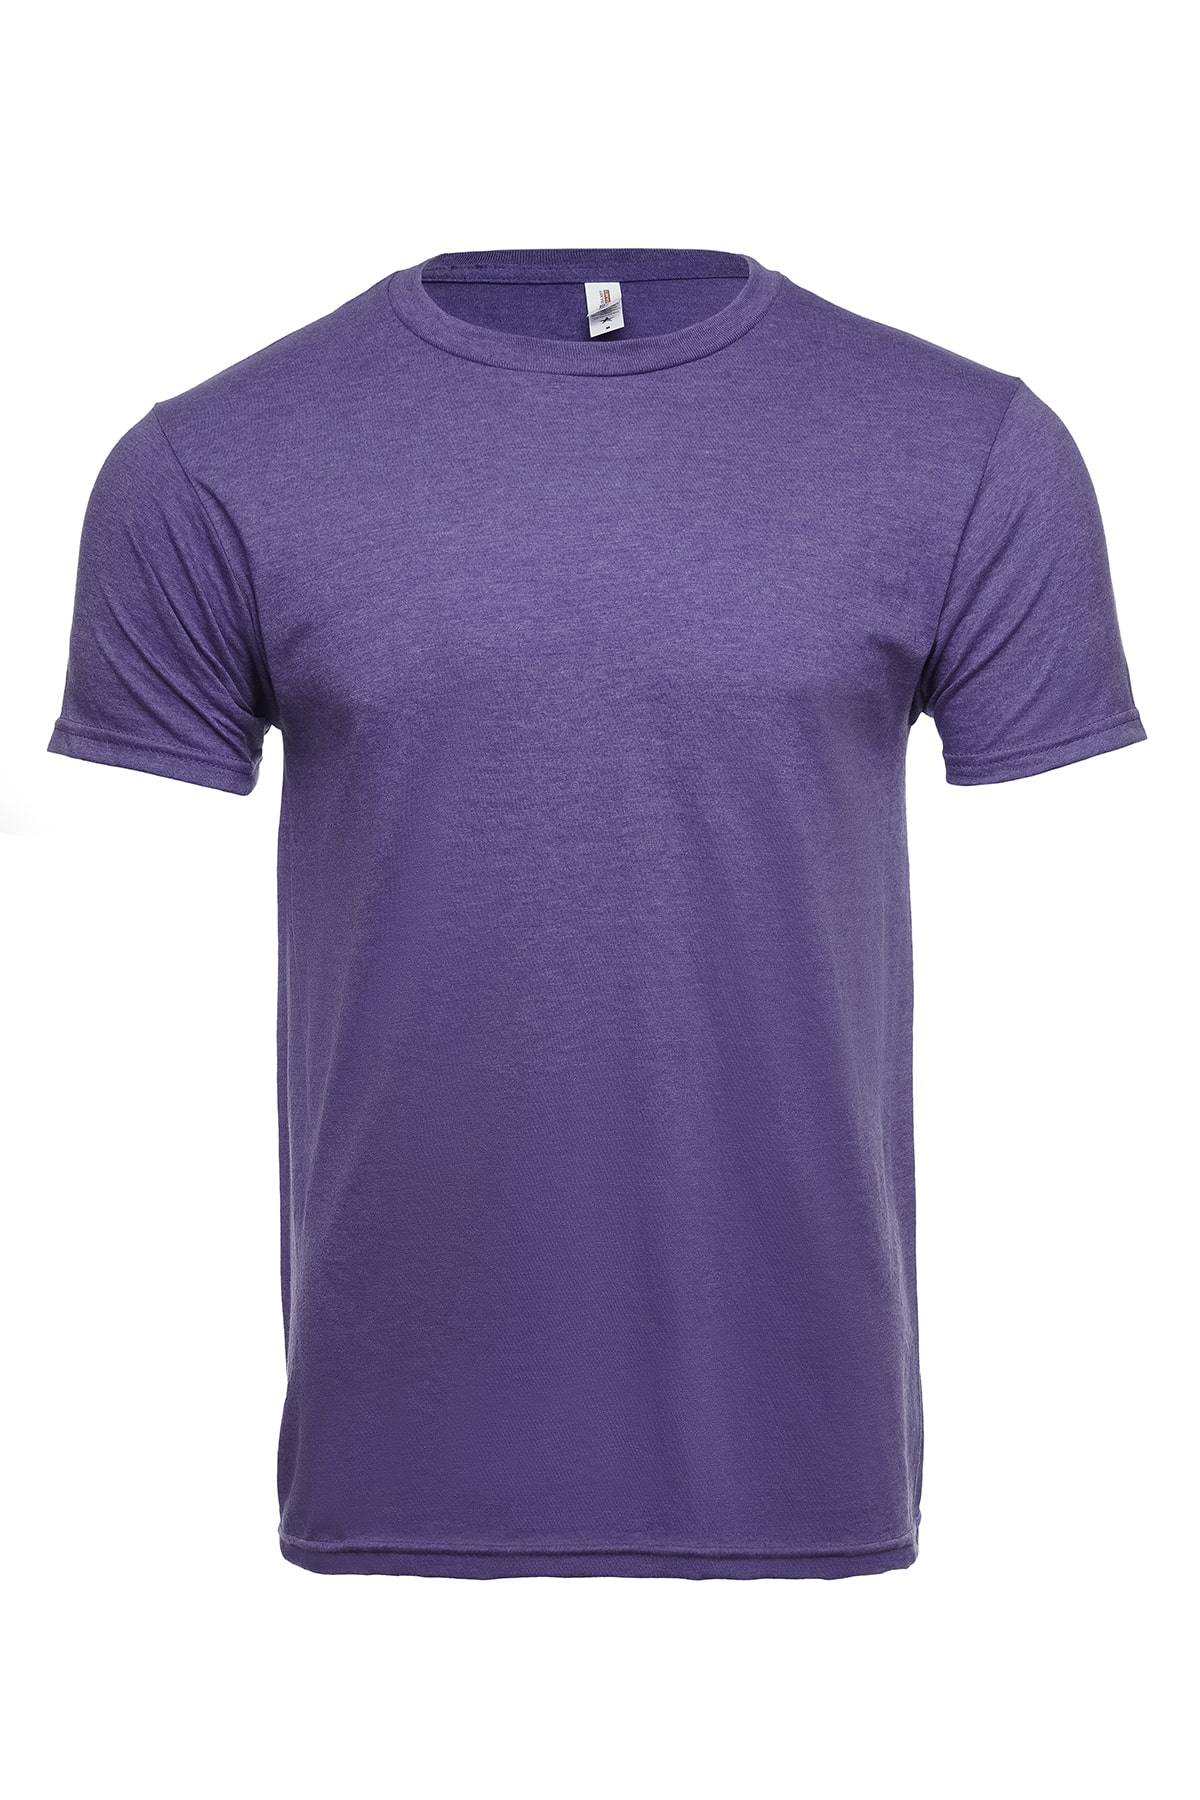 3050 Purple Heather Front T-shirt